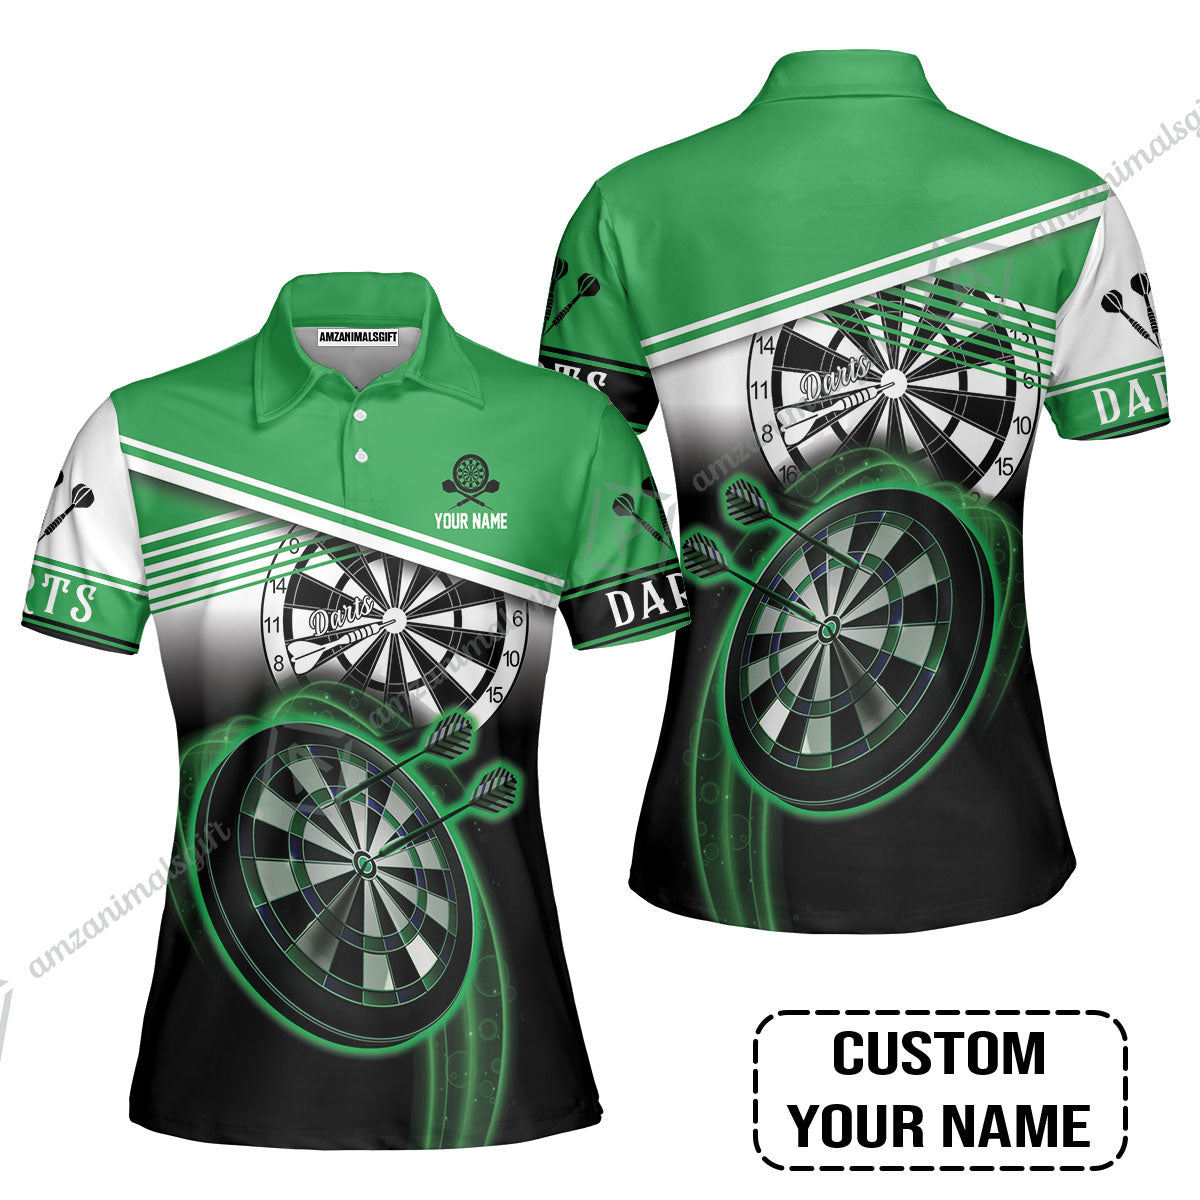 Customized Darts Women Polo Shirt, Personalized Name Darts Polo Shirt - Perfect Gift For Darts Lovers, Darts Players